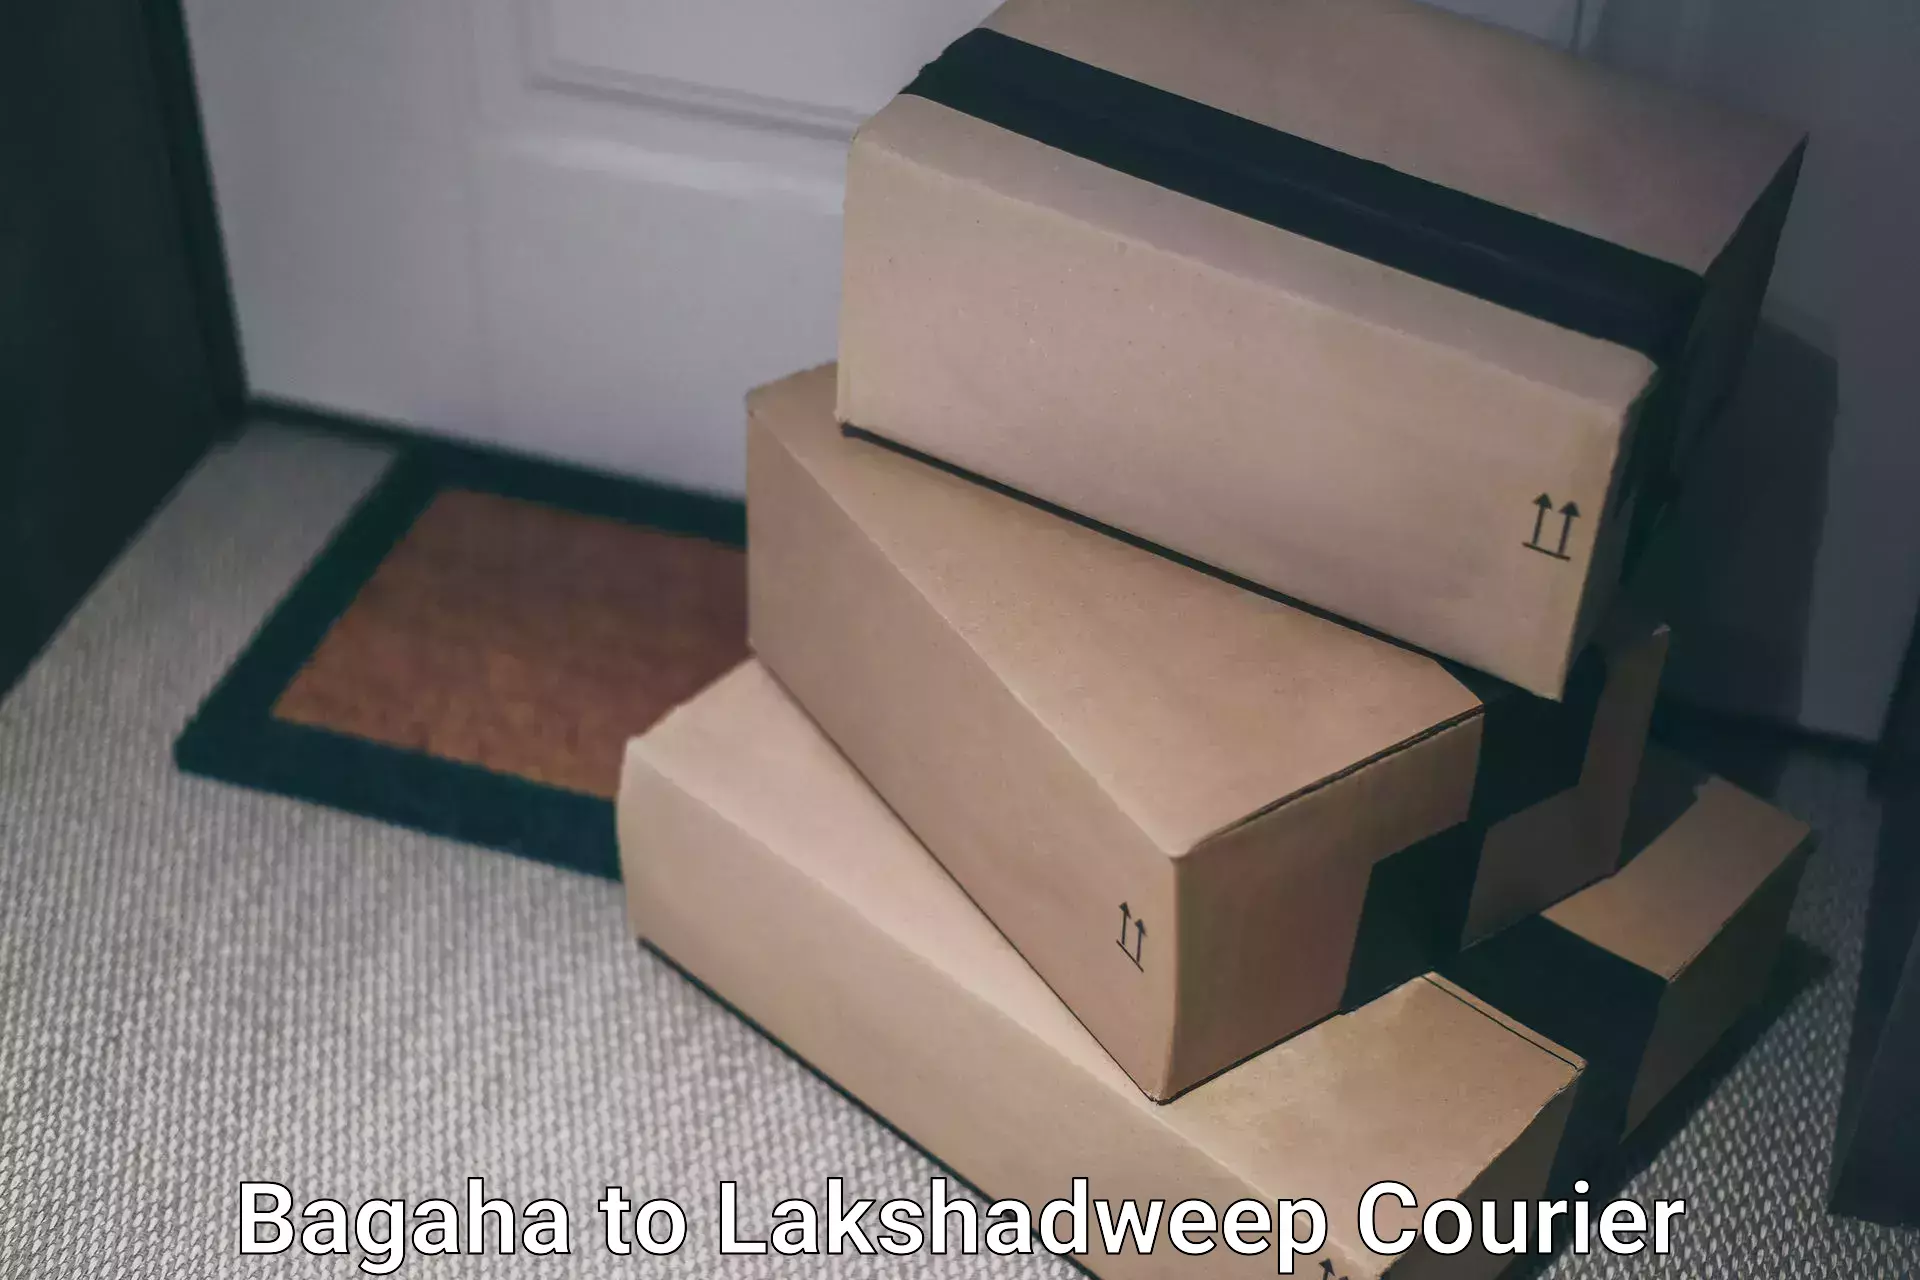 Easy return solutions Bagaha to Lakshadweep